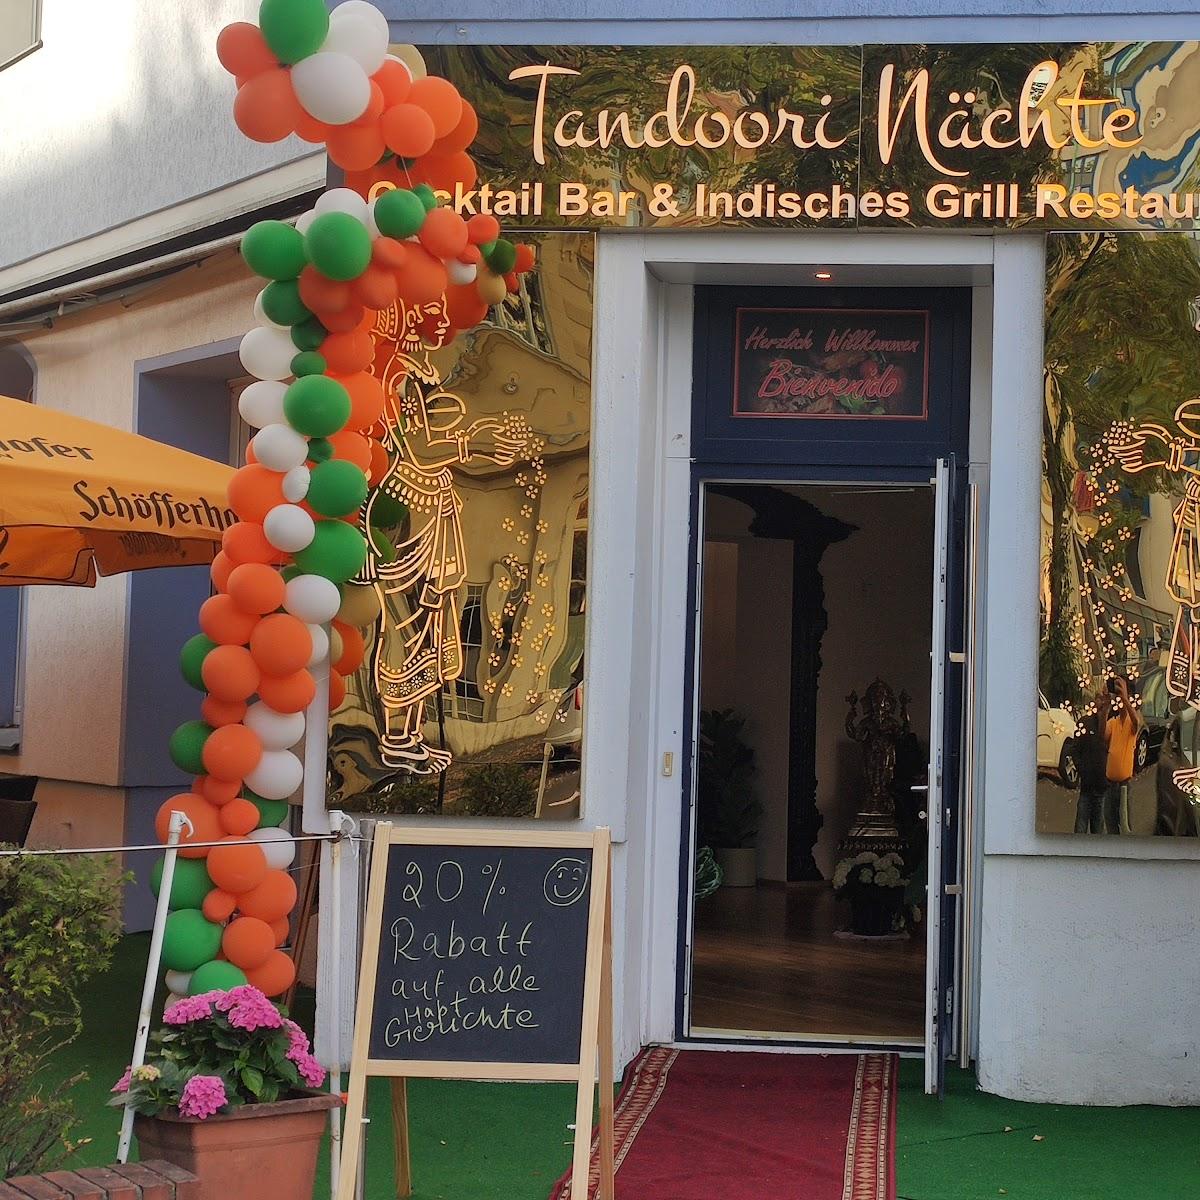 Restaurant "Tandoori Nächte, Tandoori Nights" in Berlin